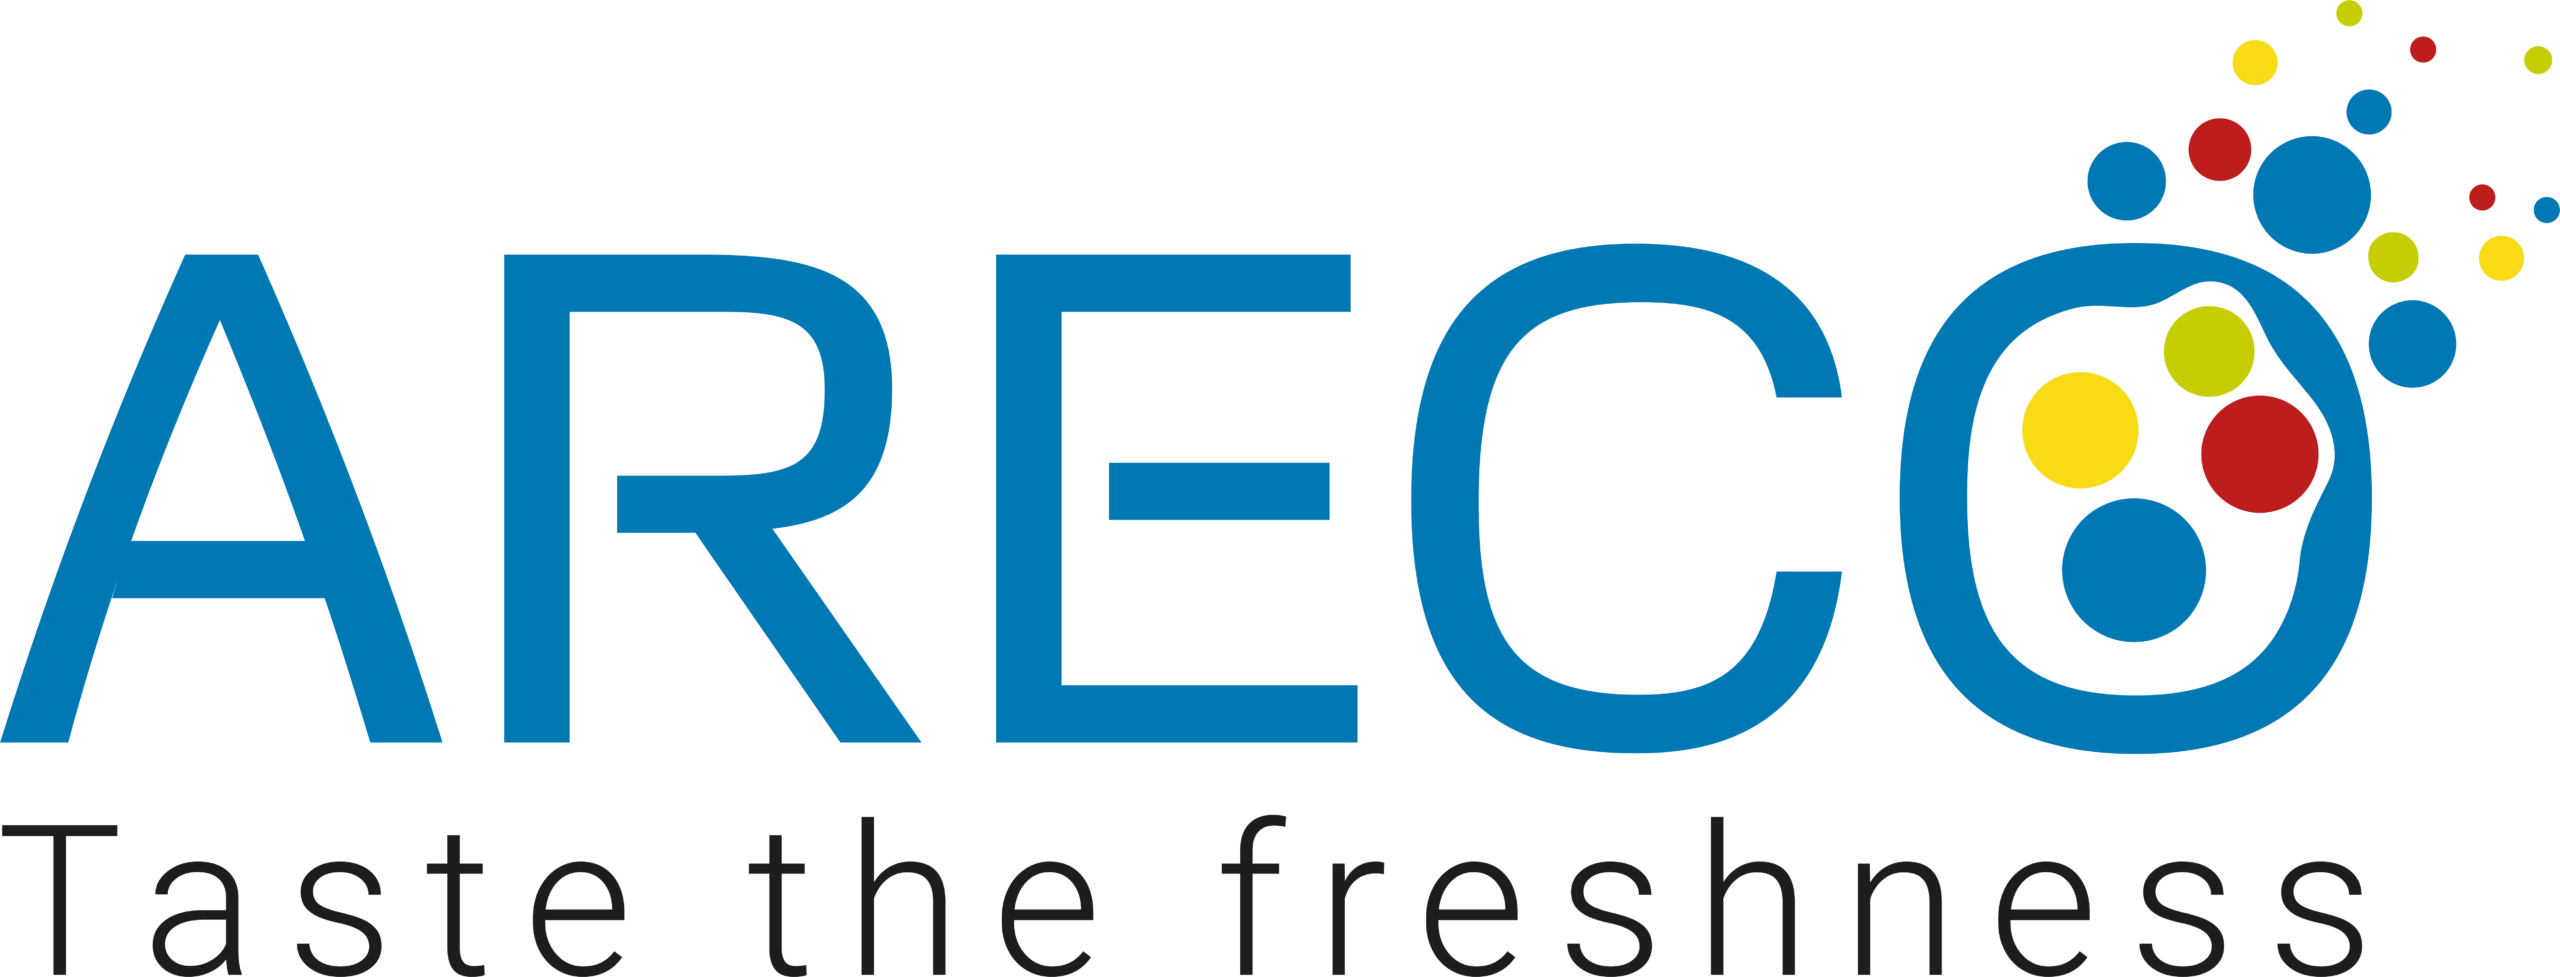 Logo ARECO_baseline